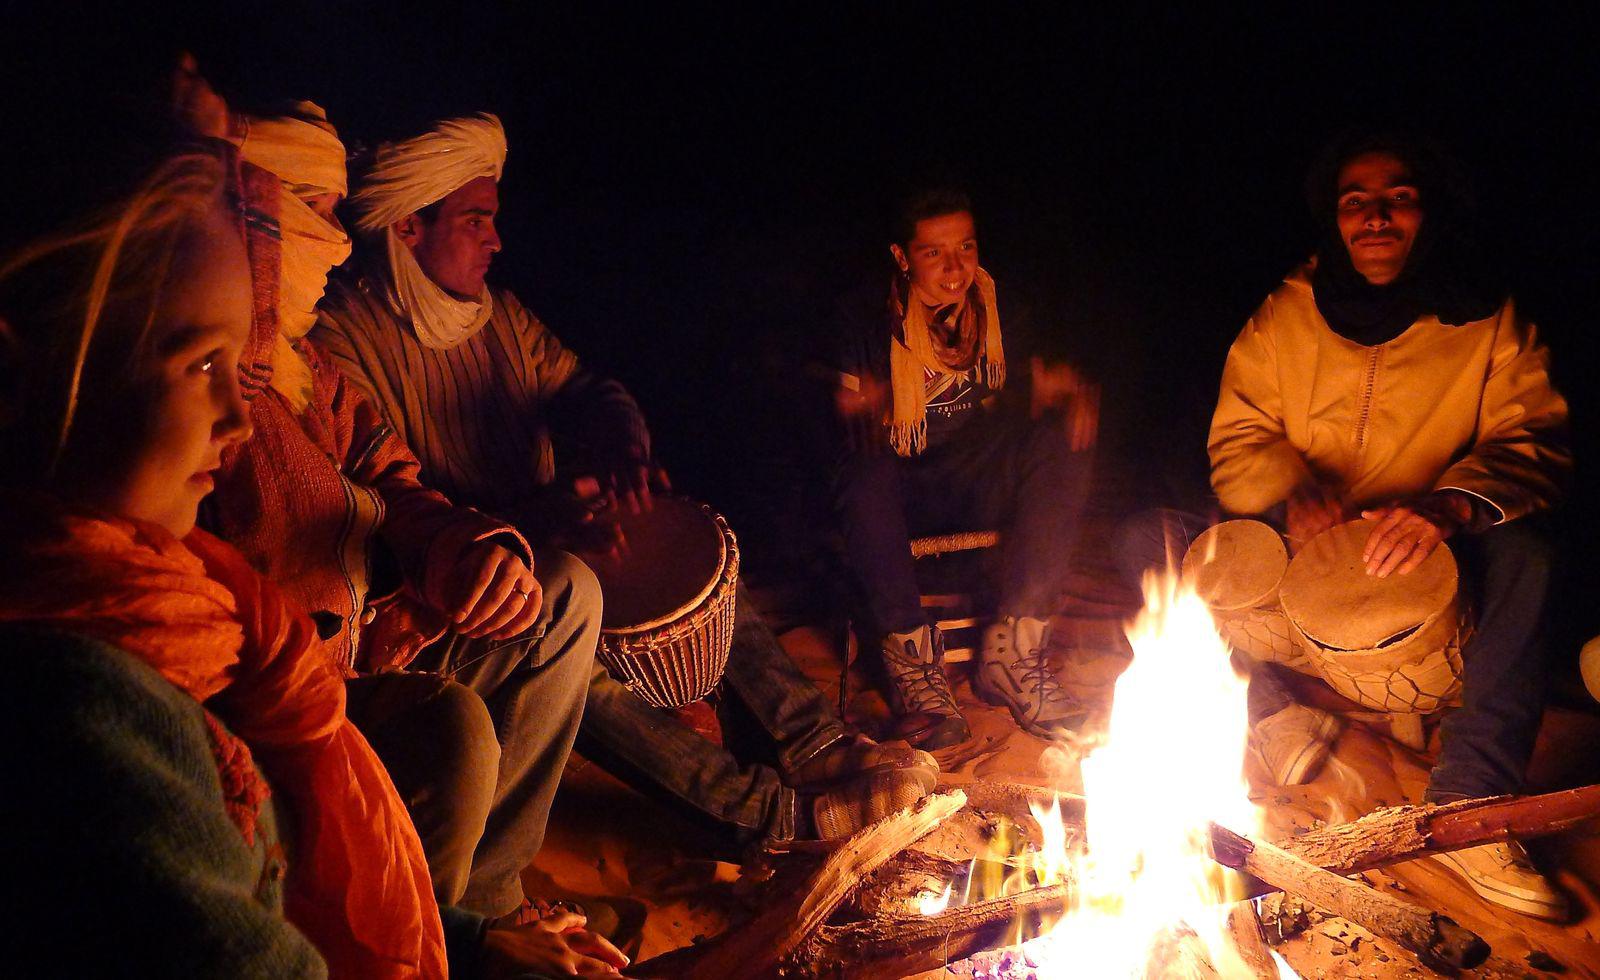 Traditional Music Around Campfire